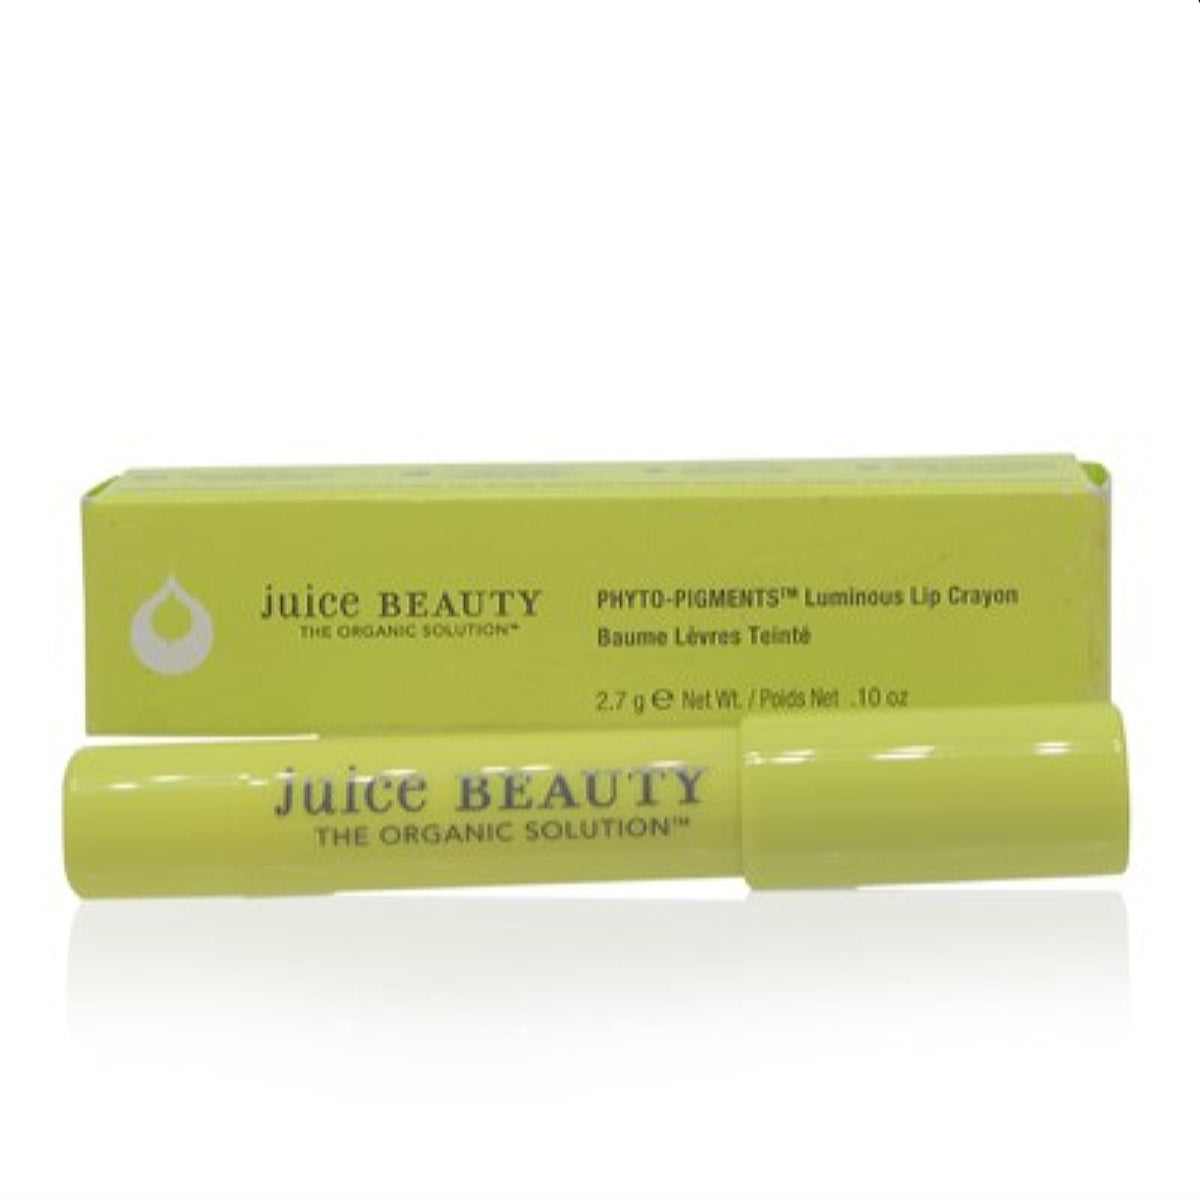 Juice Beauty Phyto-Pigments Luminous Lip Crayon (26 Healdsburg) 0.10 Oz  